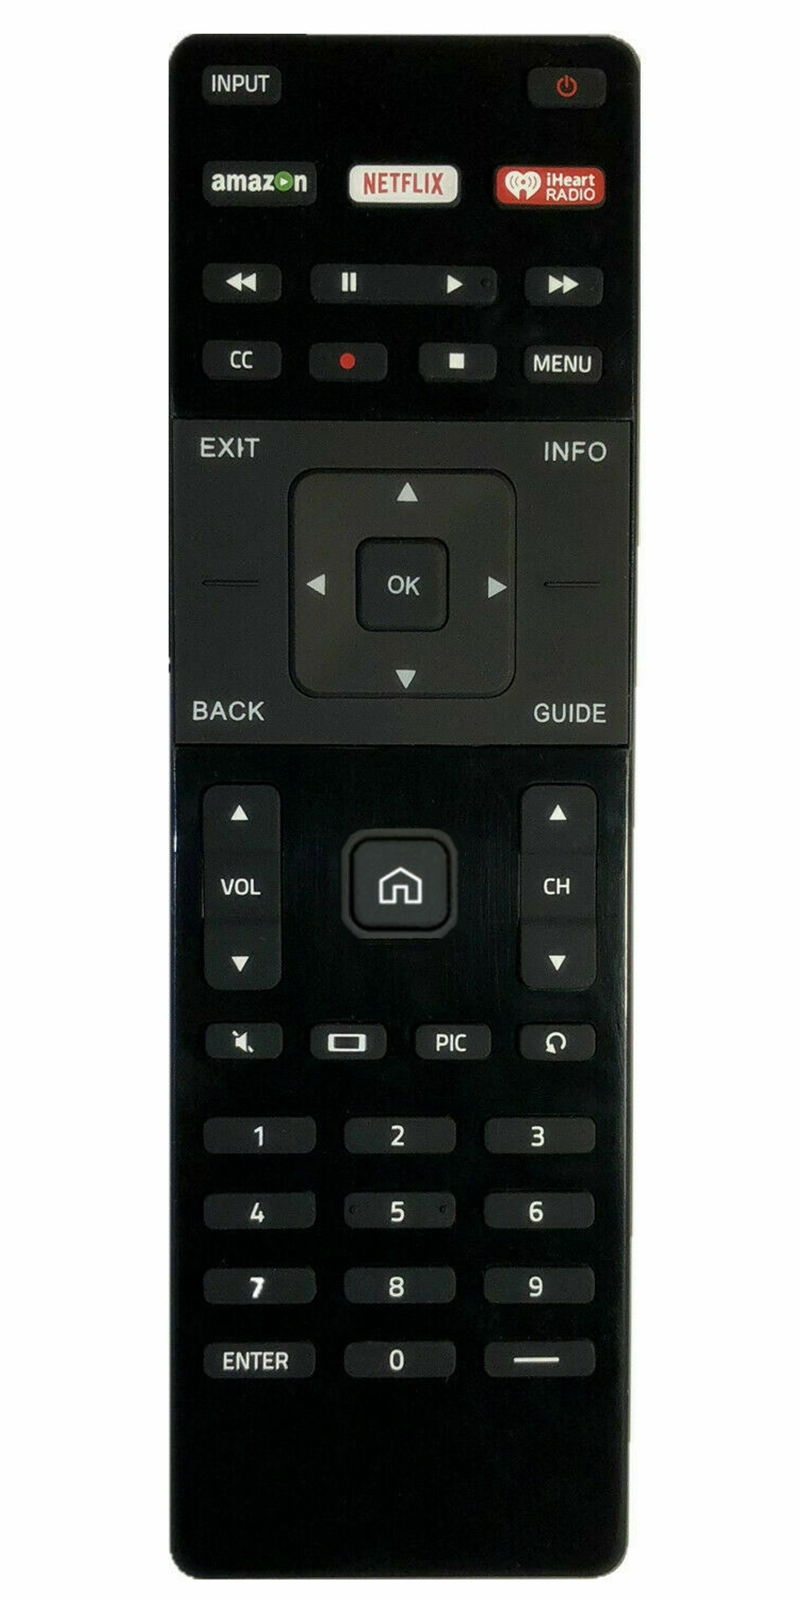 XRT122 for Smart TV Vizio Remote Control w Amazon Netflix IHeart Radio APP Key Vizio XRT122